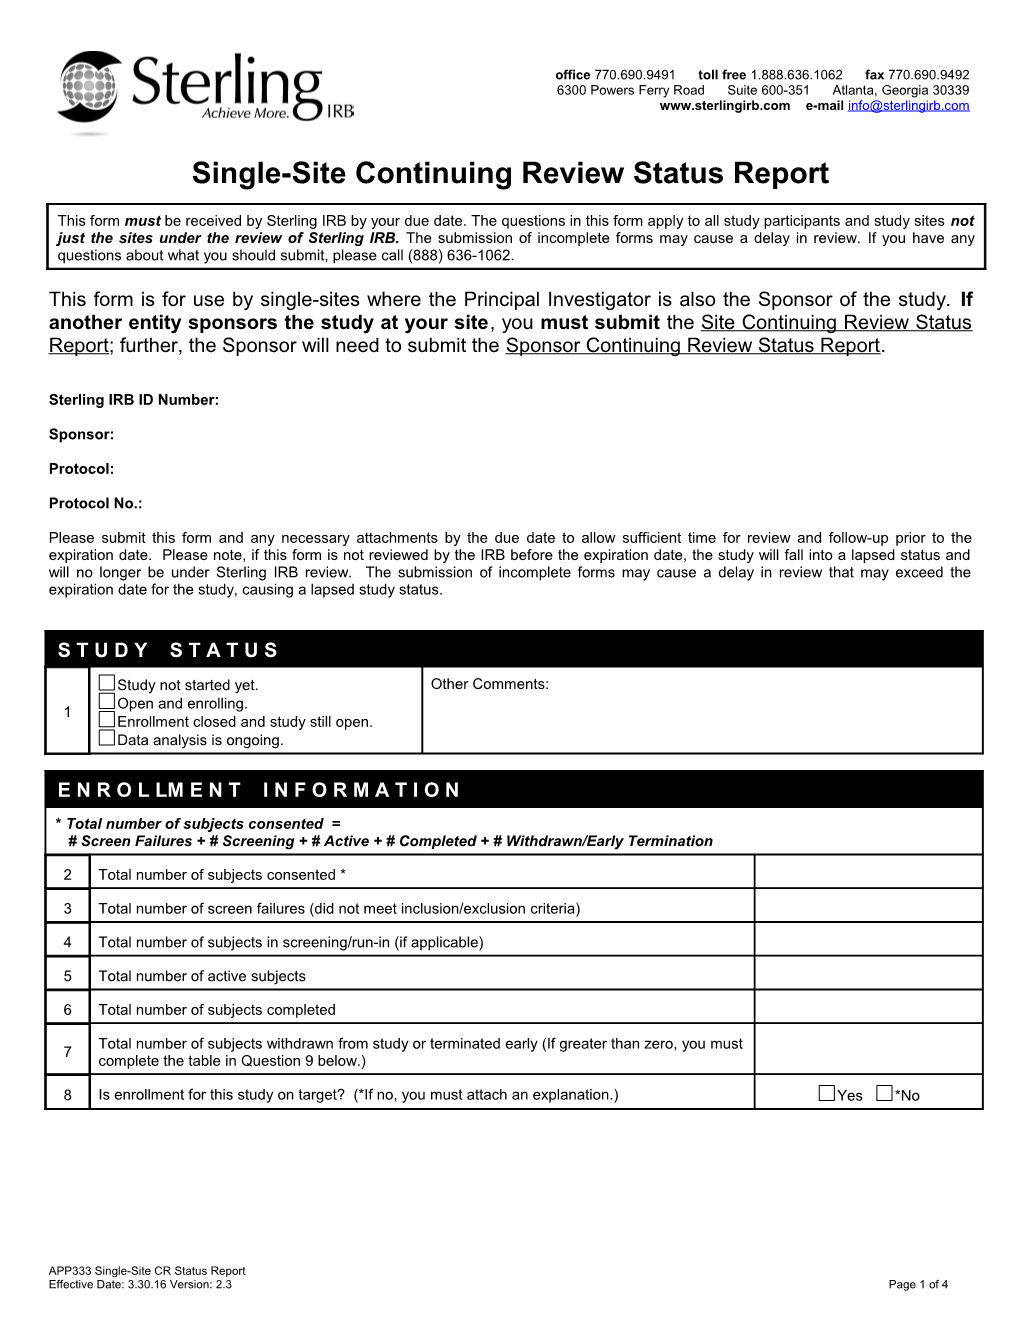 Site Continuing Review Status Report